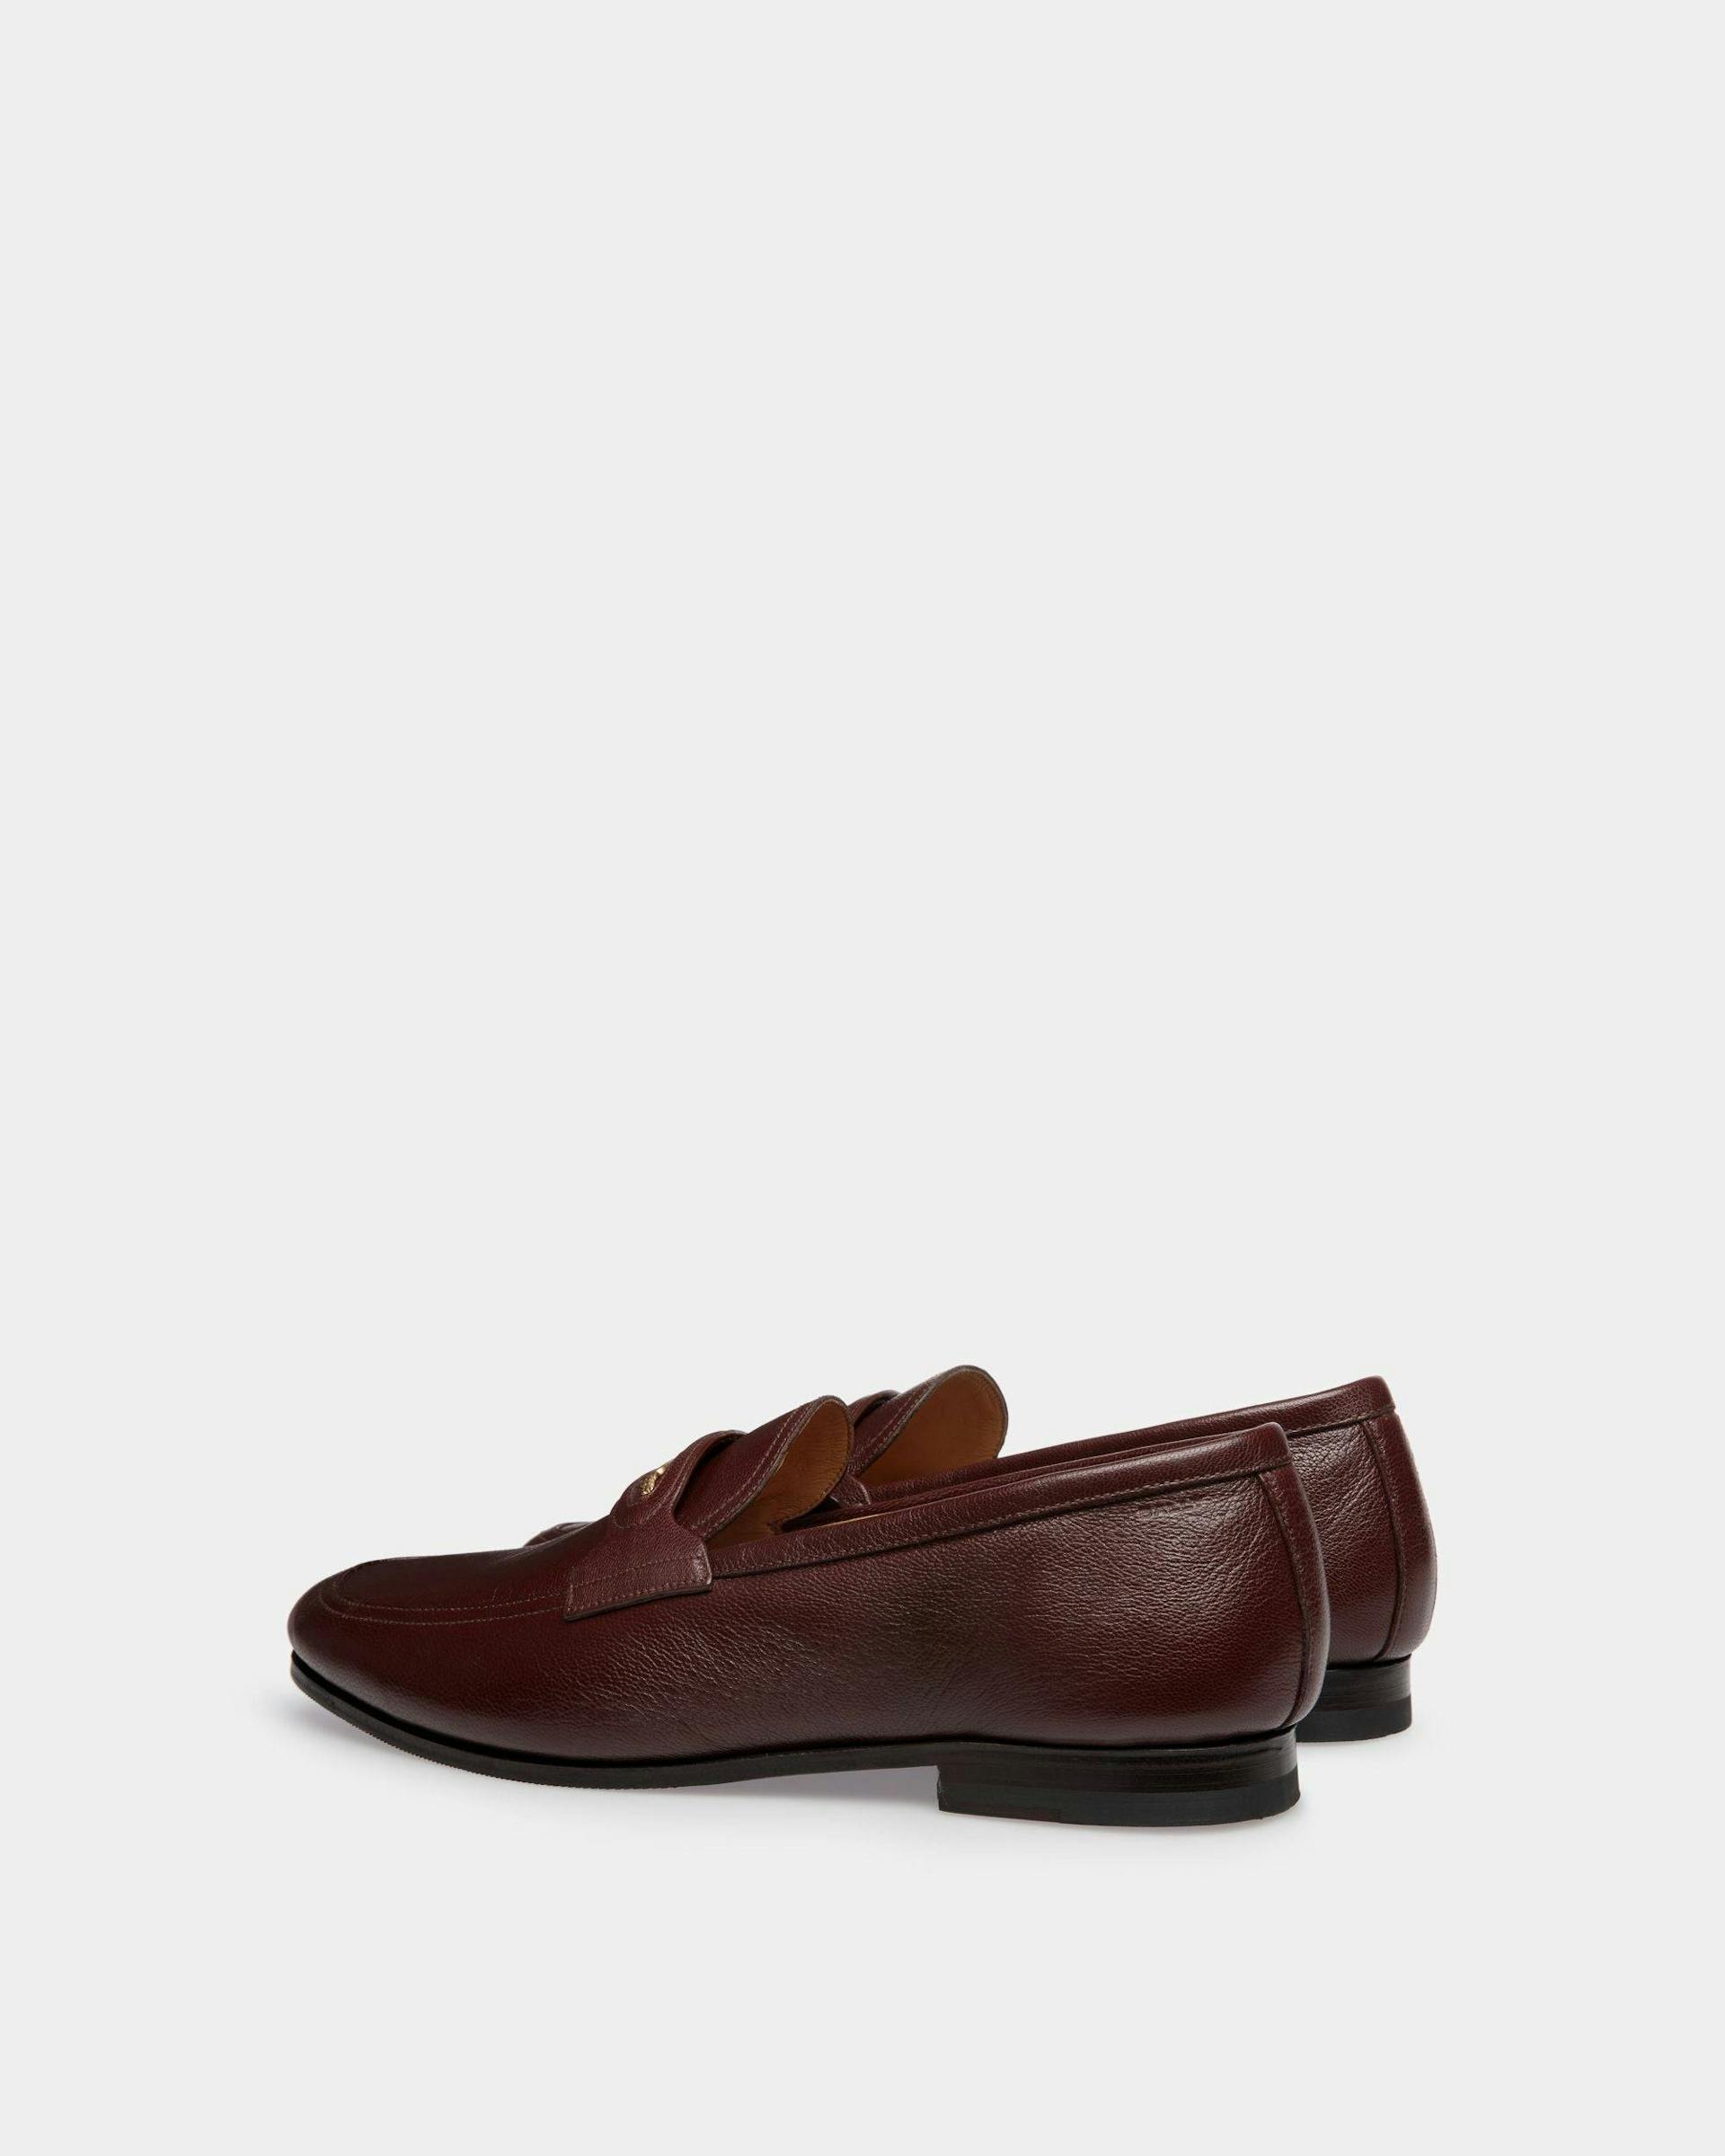 Men's Plume Loafer in Chestnut Brown Grained Leather | Bally | Still Life 3/4 Back